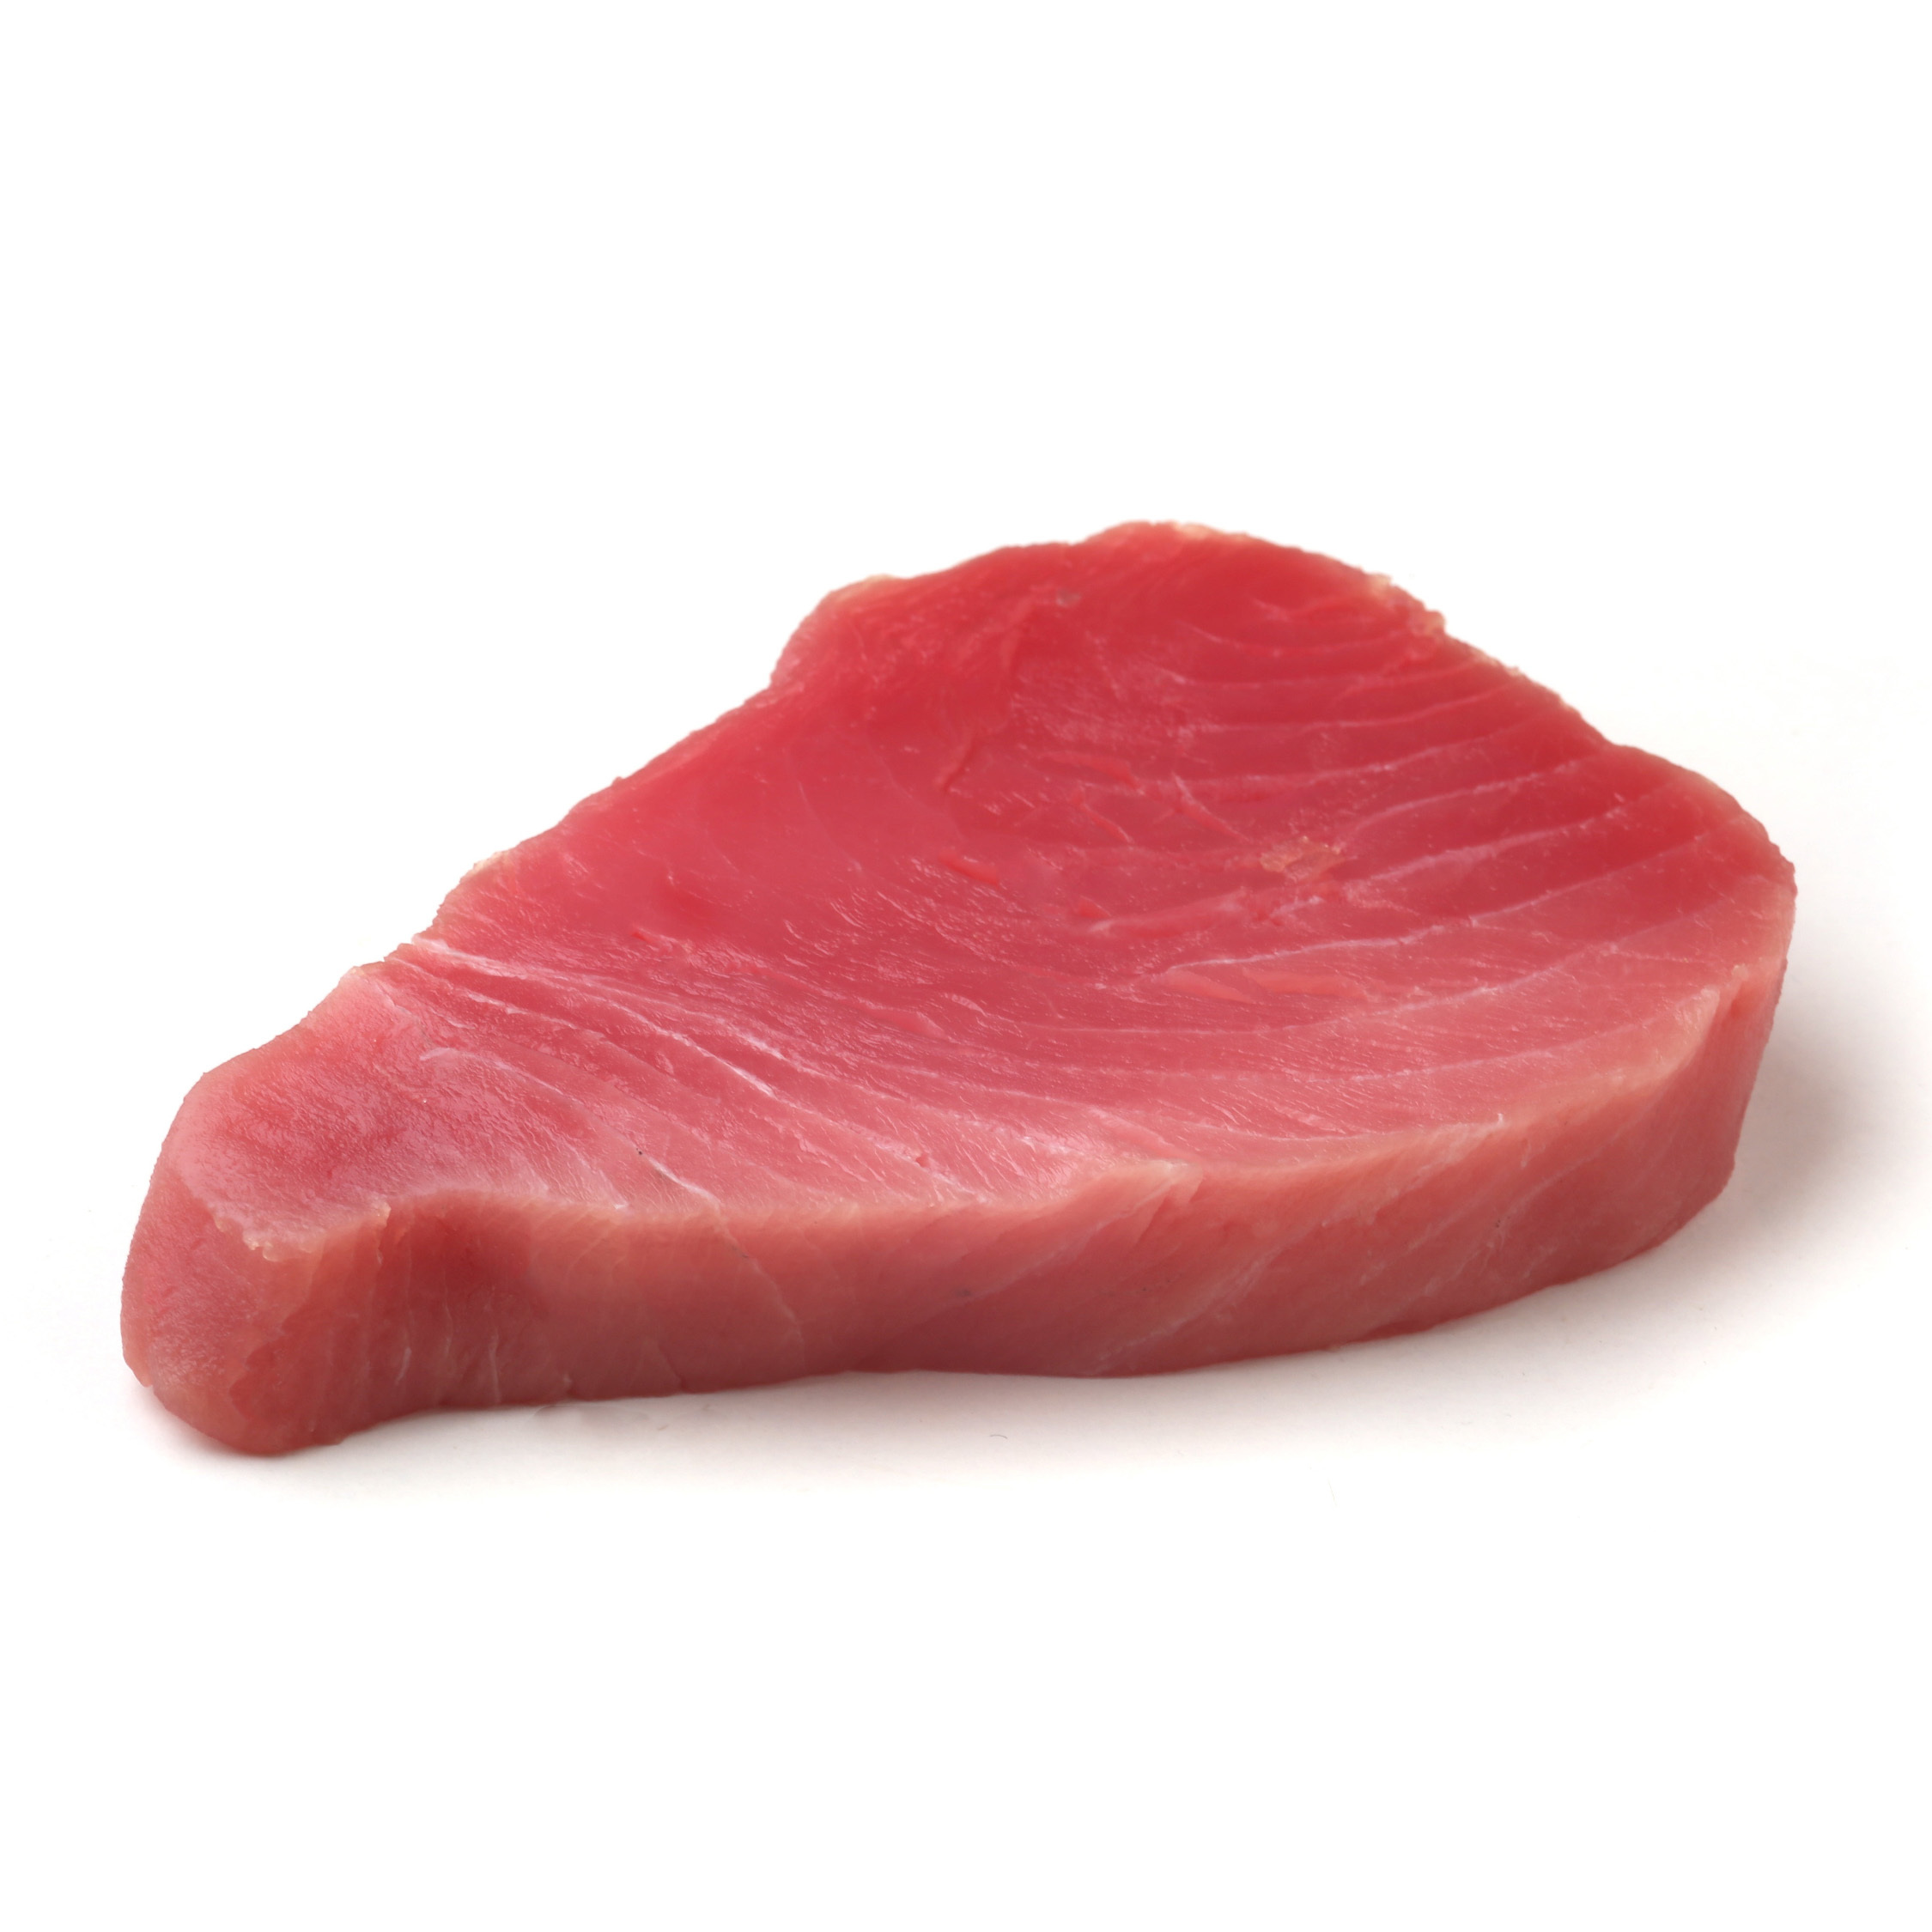 AUS Wild Caught Yellowfin Tuna Loin